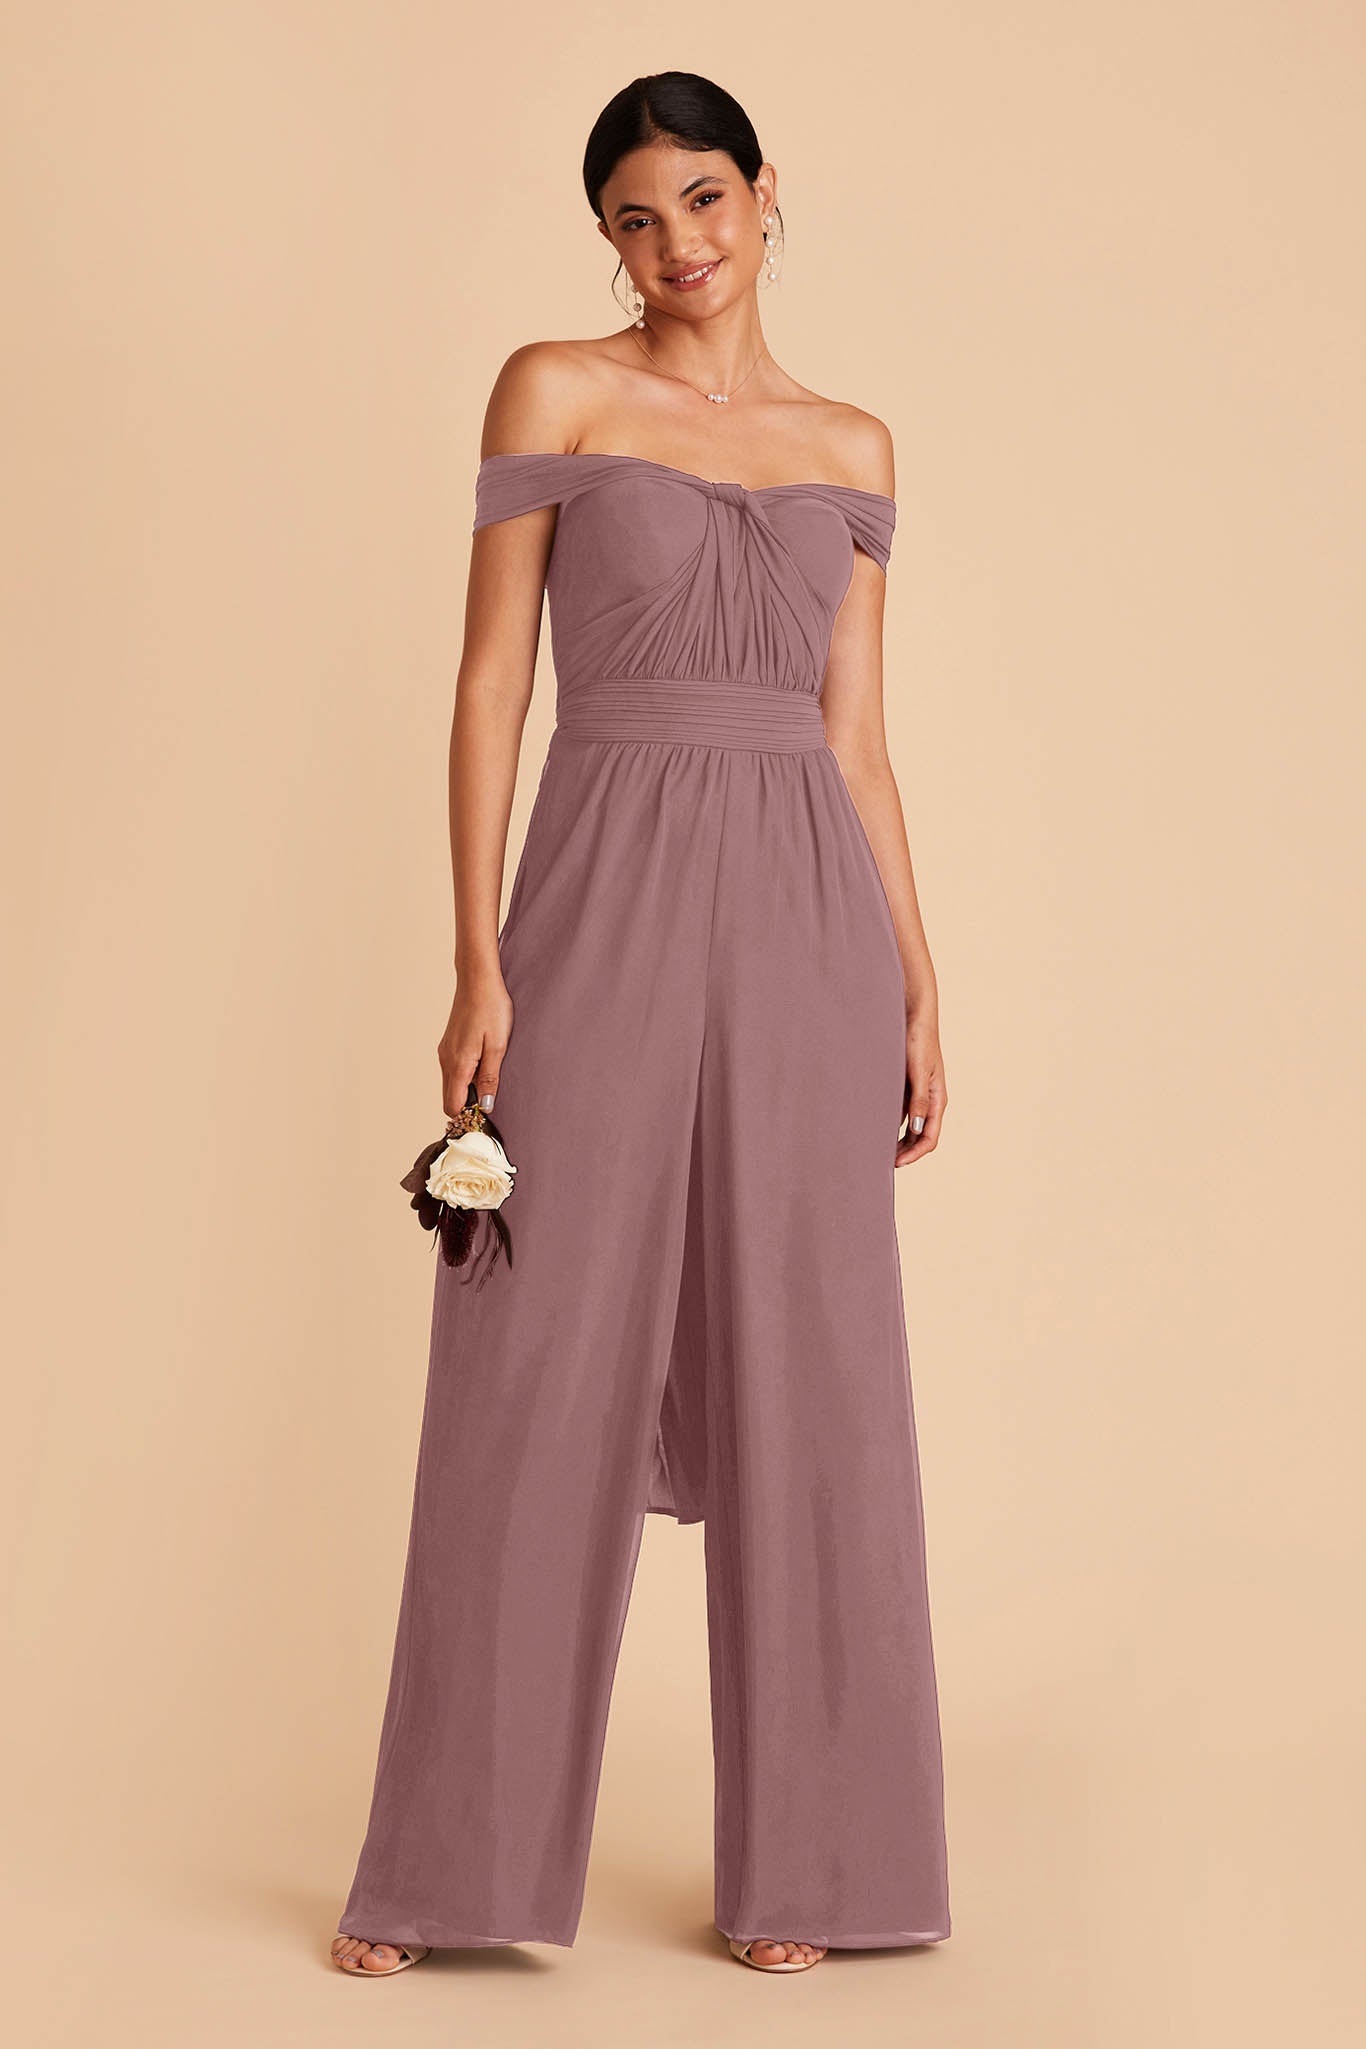 medium purple wedding jumpsuit with sweetheart bodice with convertible neckline